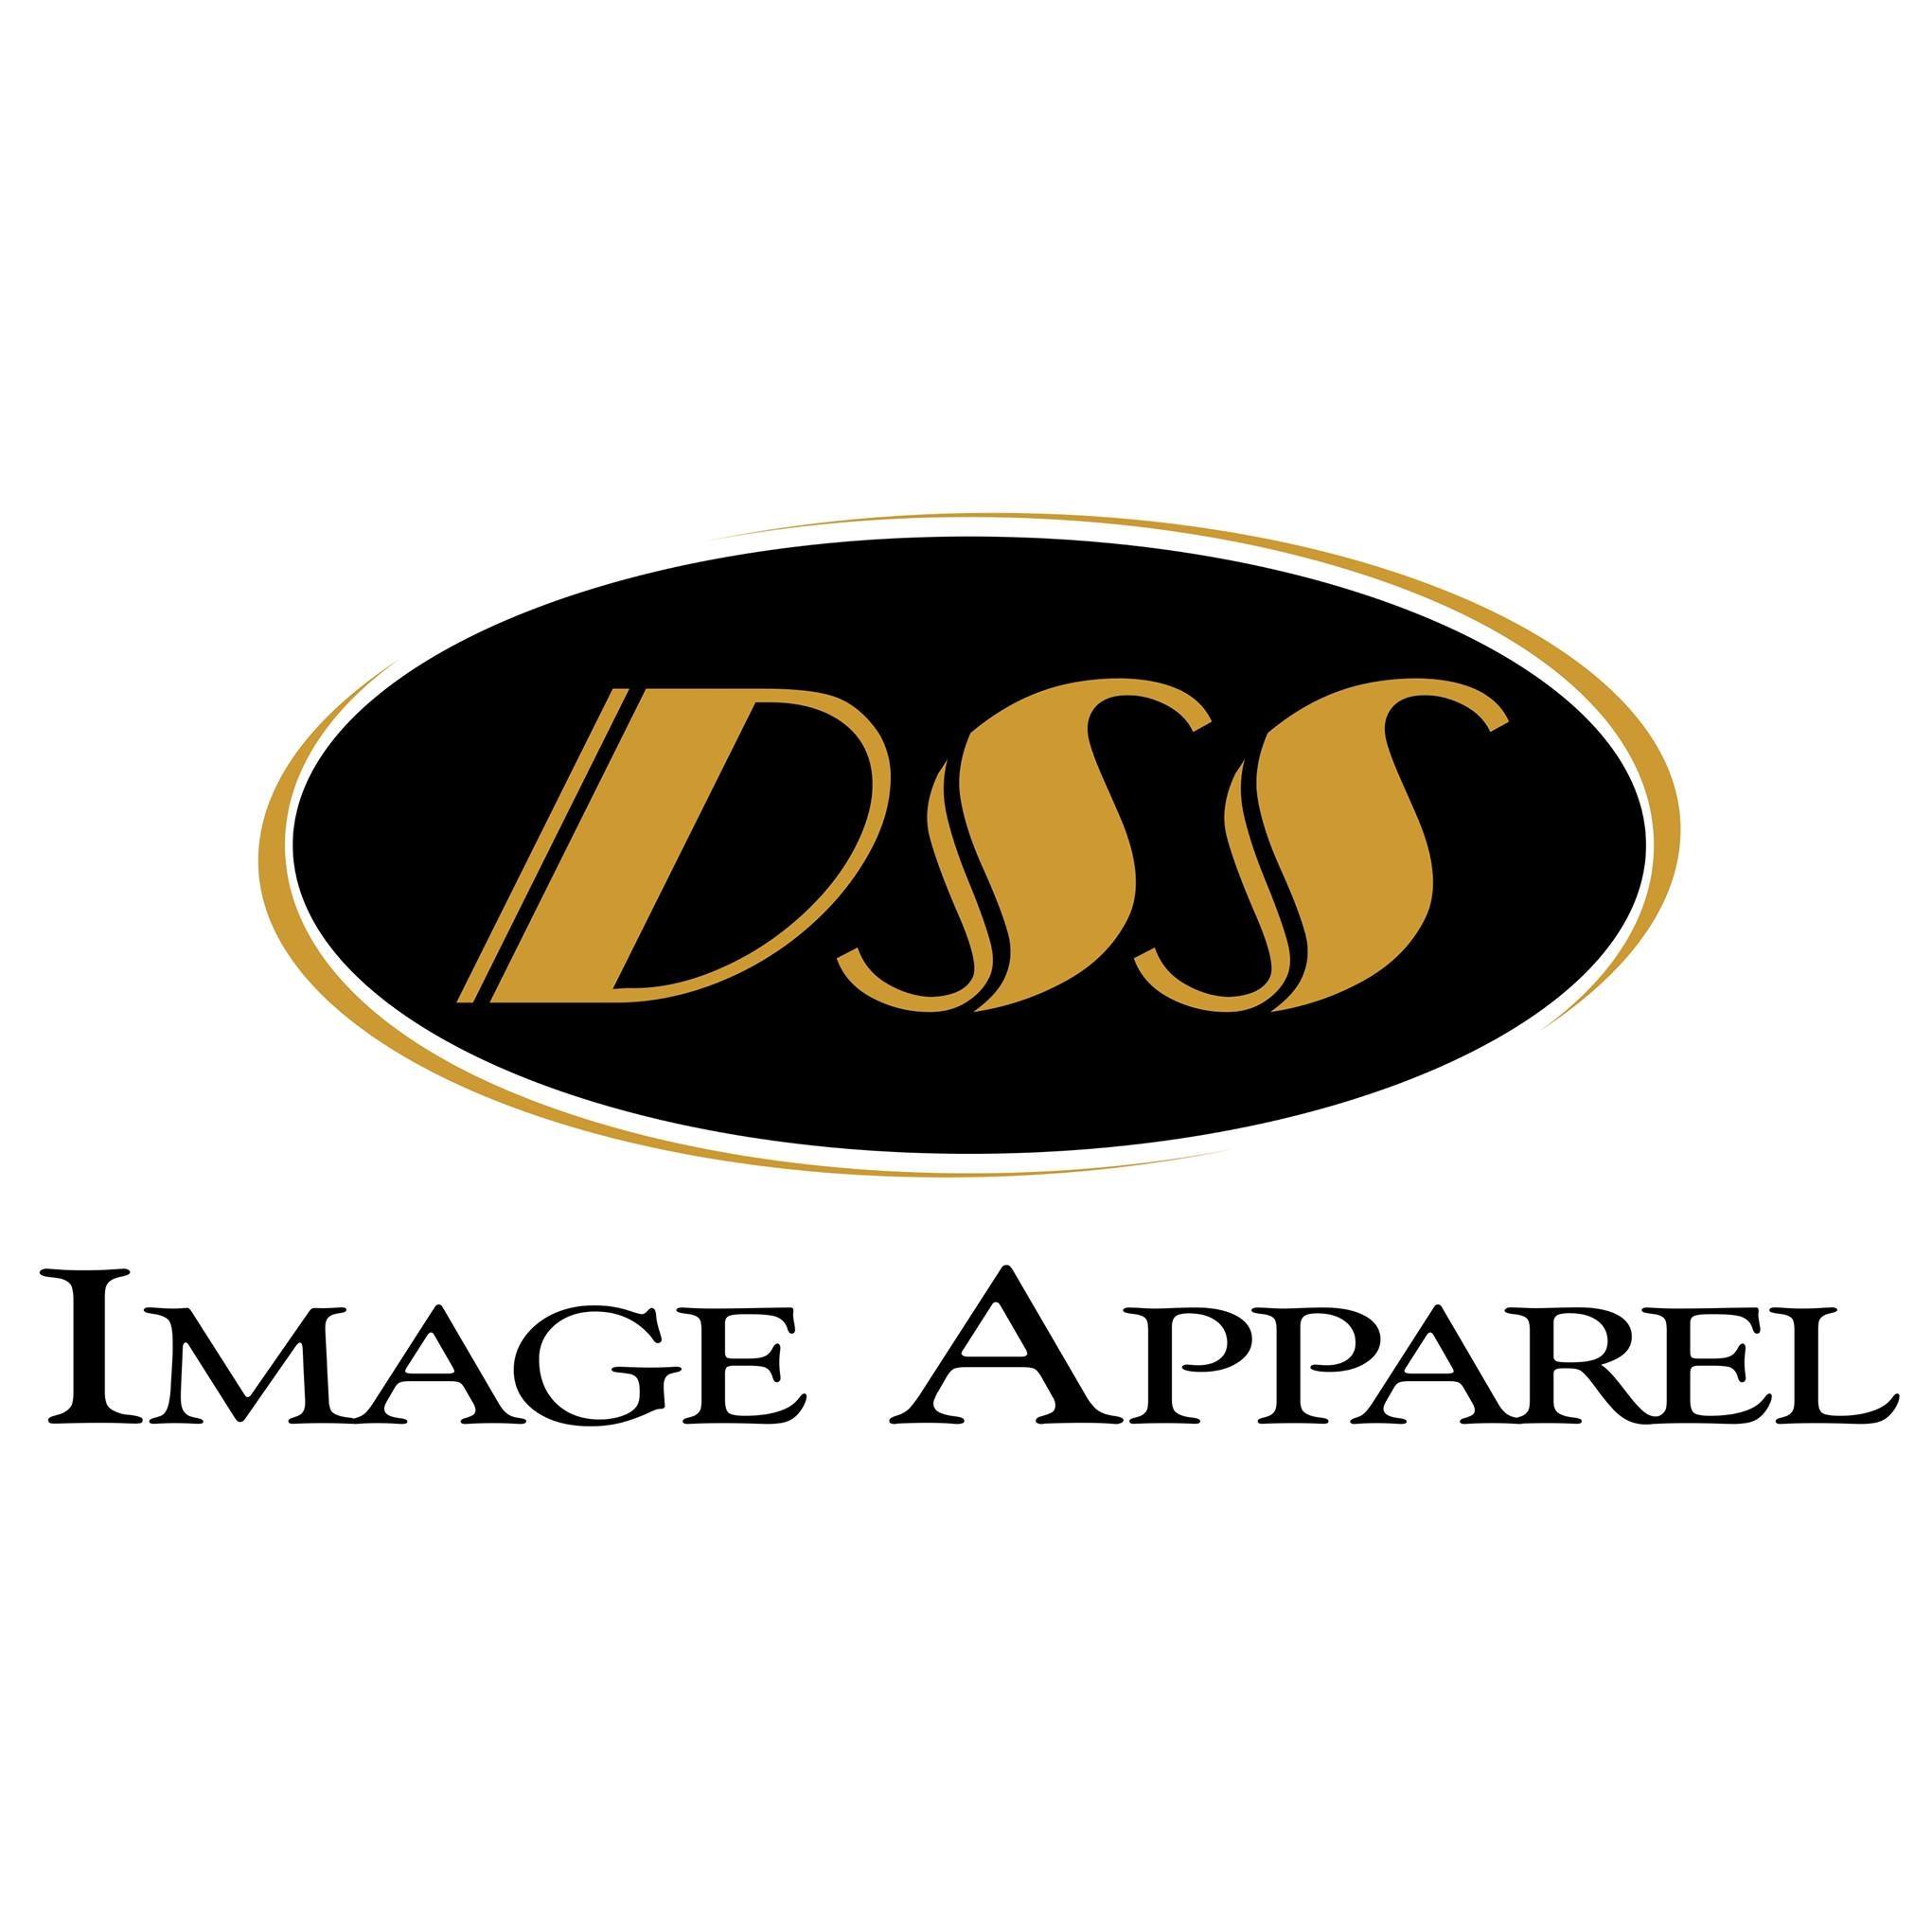 DSS Image Apparel